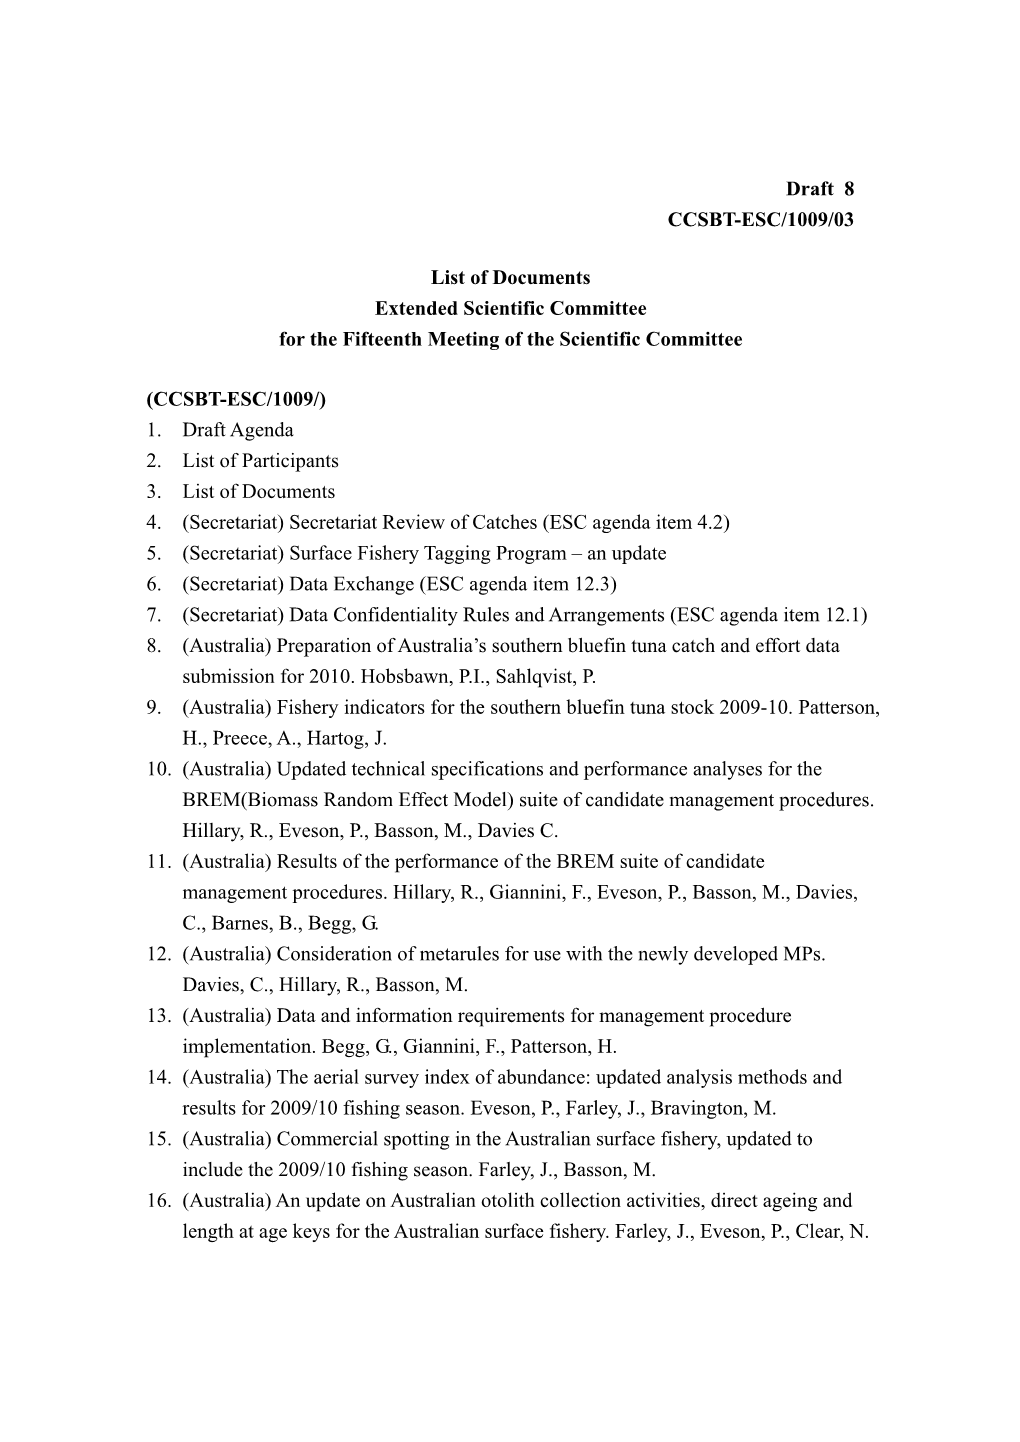 Draft 8 CCSBT-ESC/1009/03 List of Documents Extended Scientific